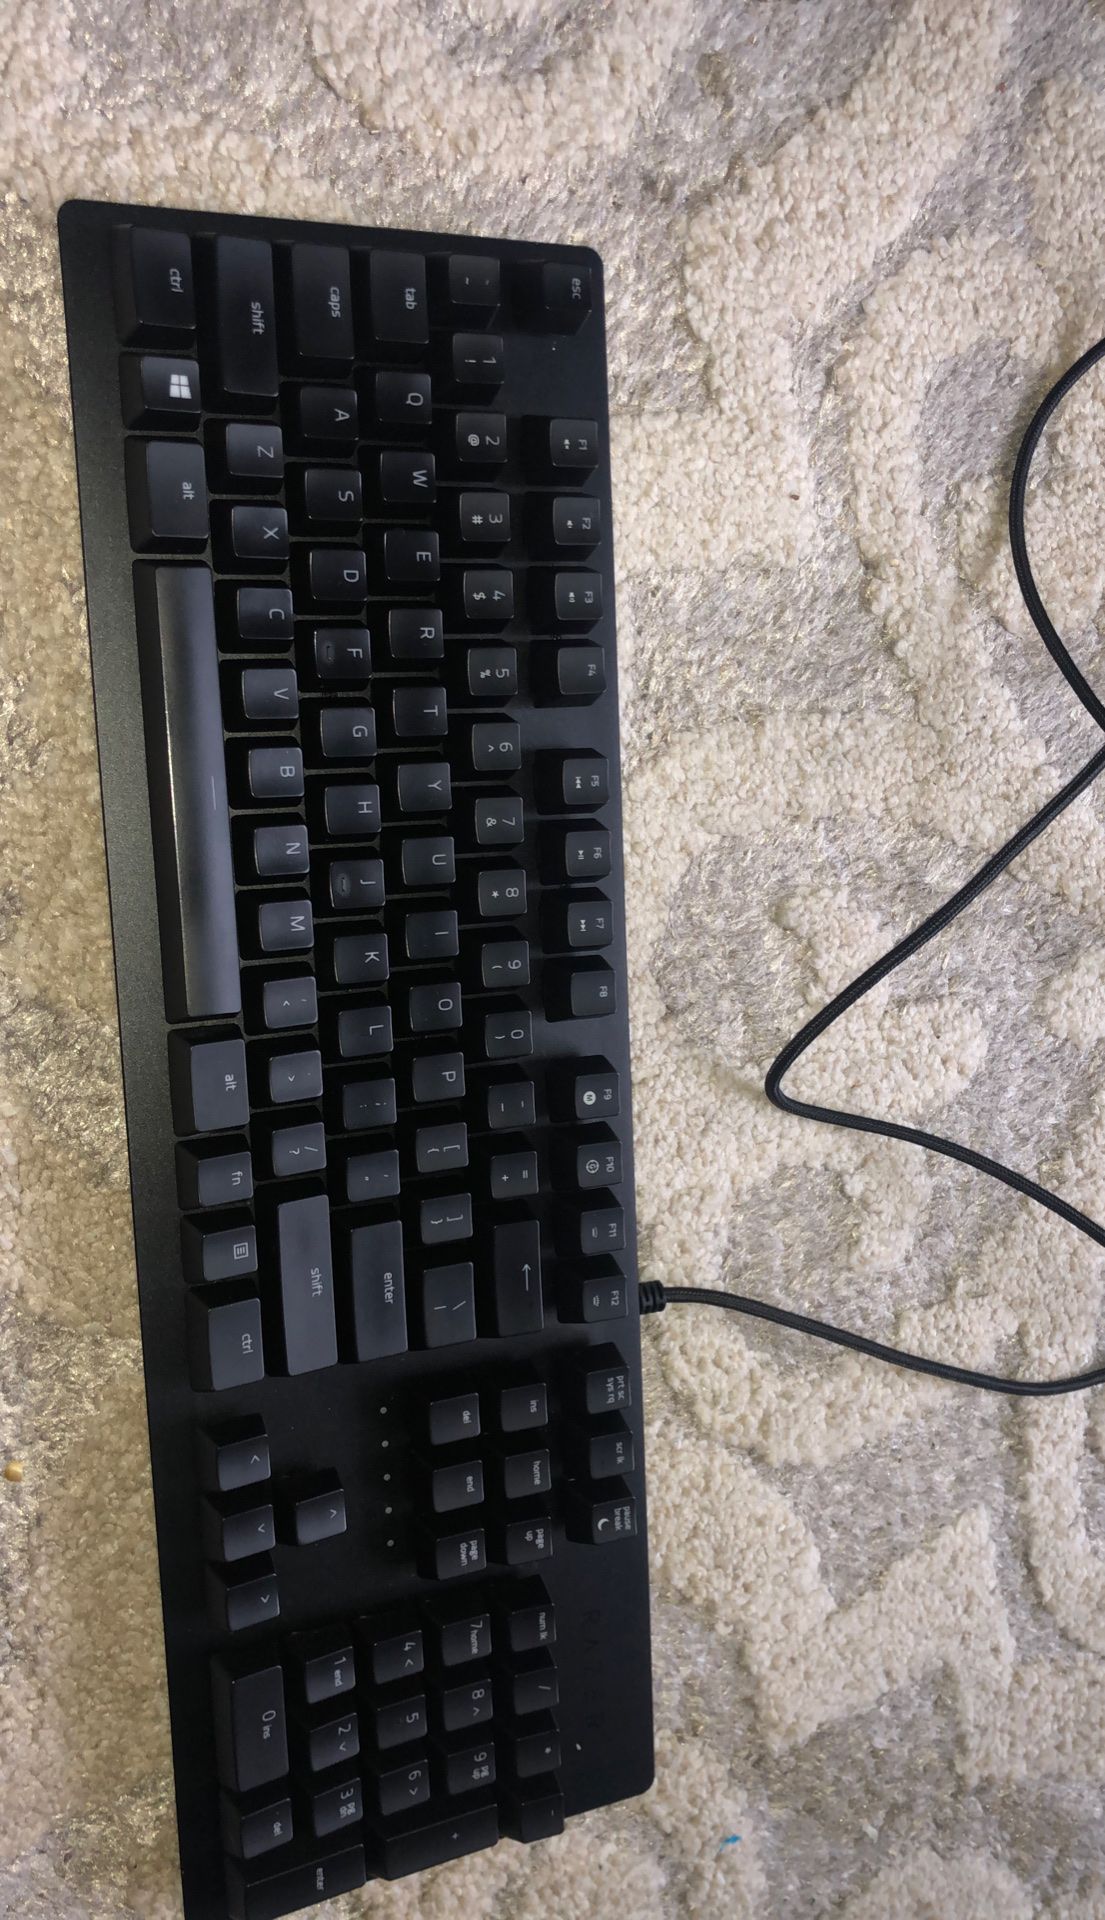 Razor keyboard